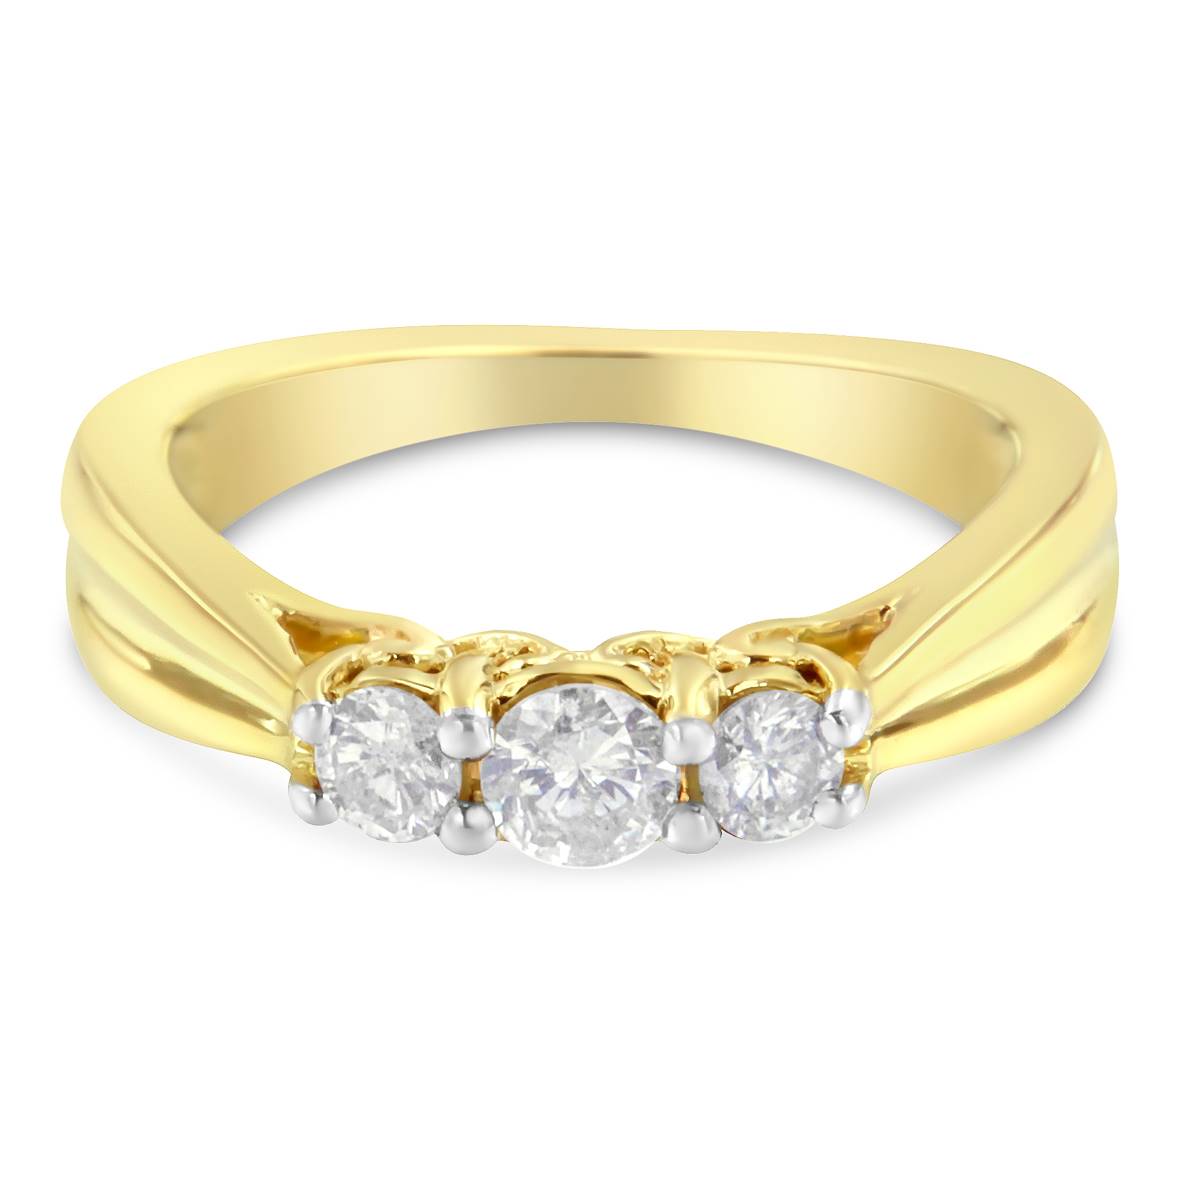 Now Then & Forever(tm) Yellow Gold Three Stone Diamond Ring